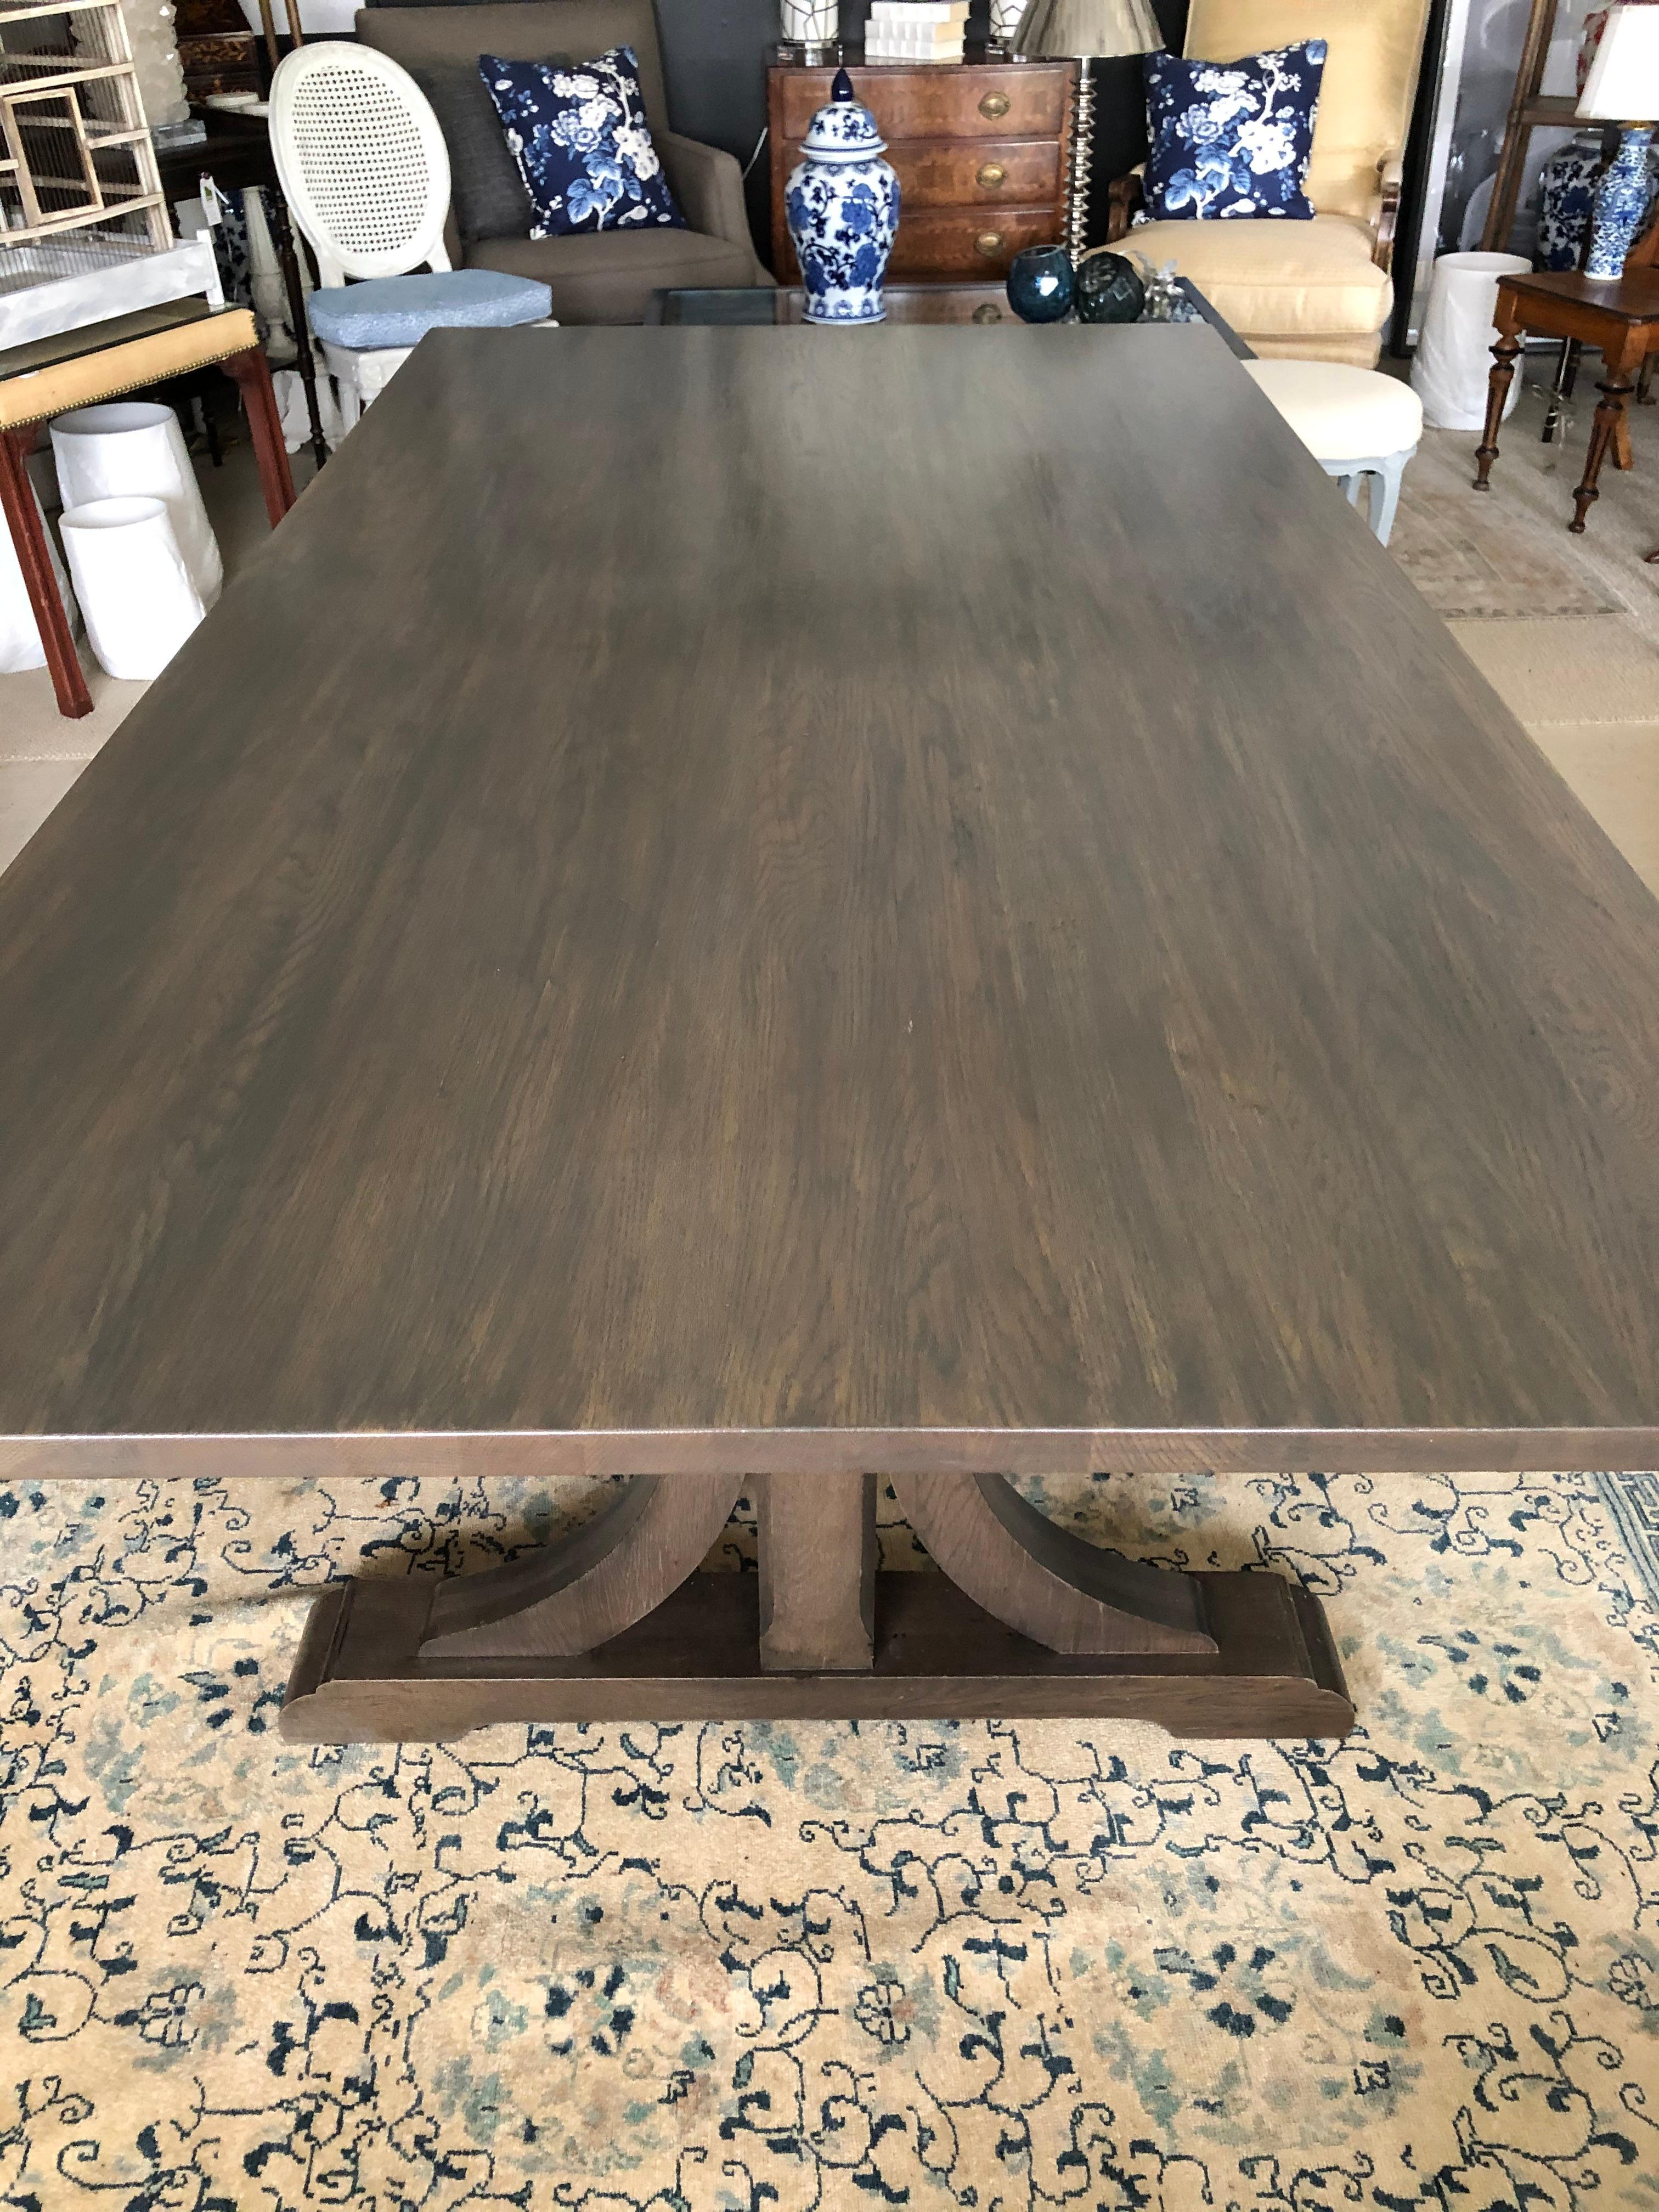 Impressive large sophisticated trestle oak dining table having a distinguished 